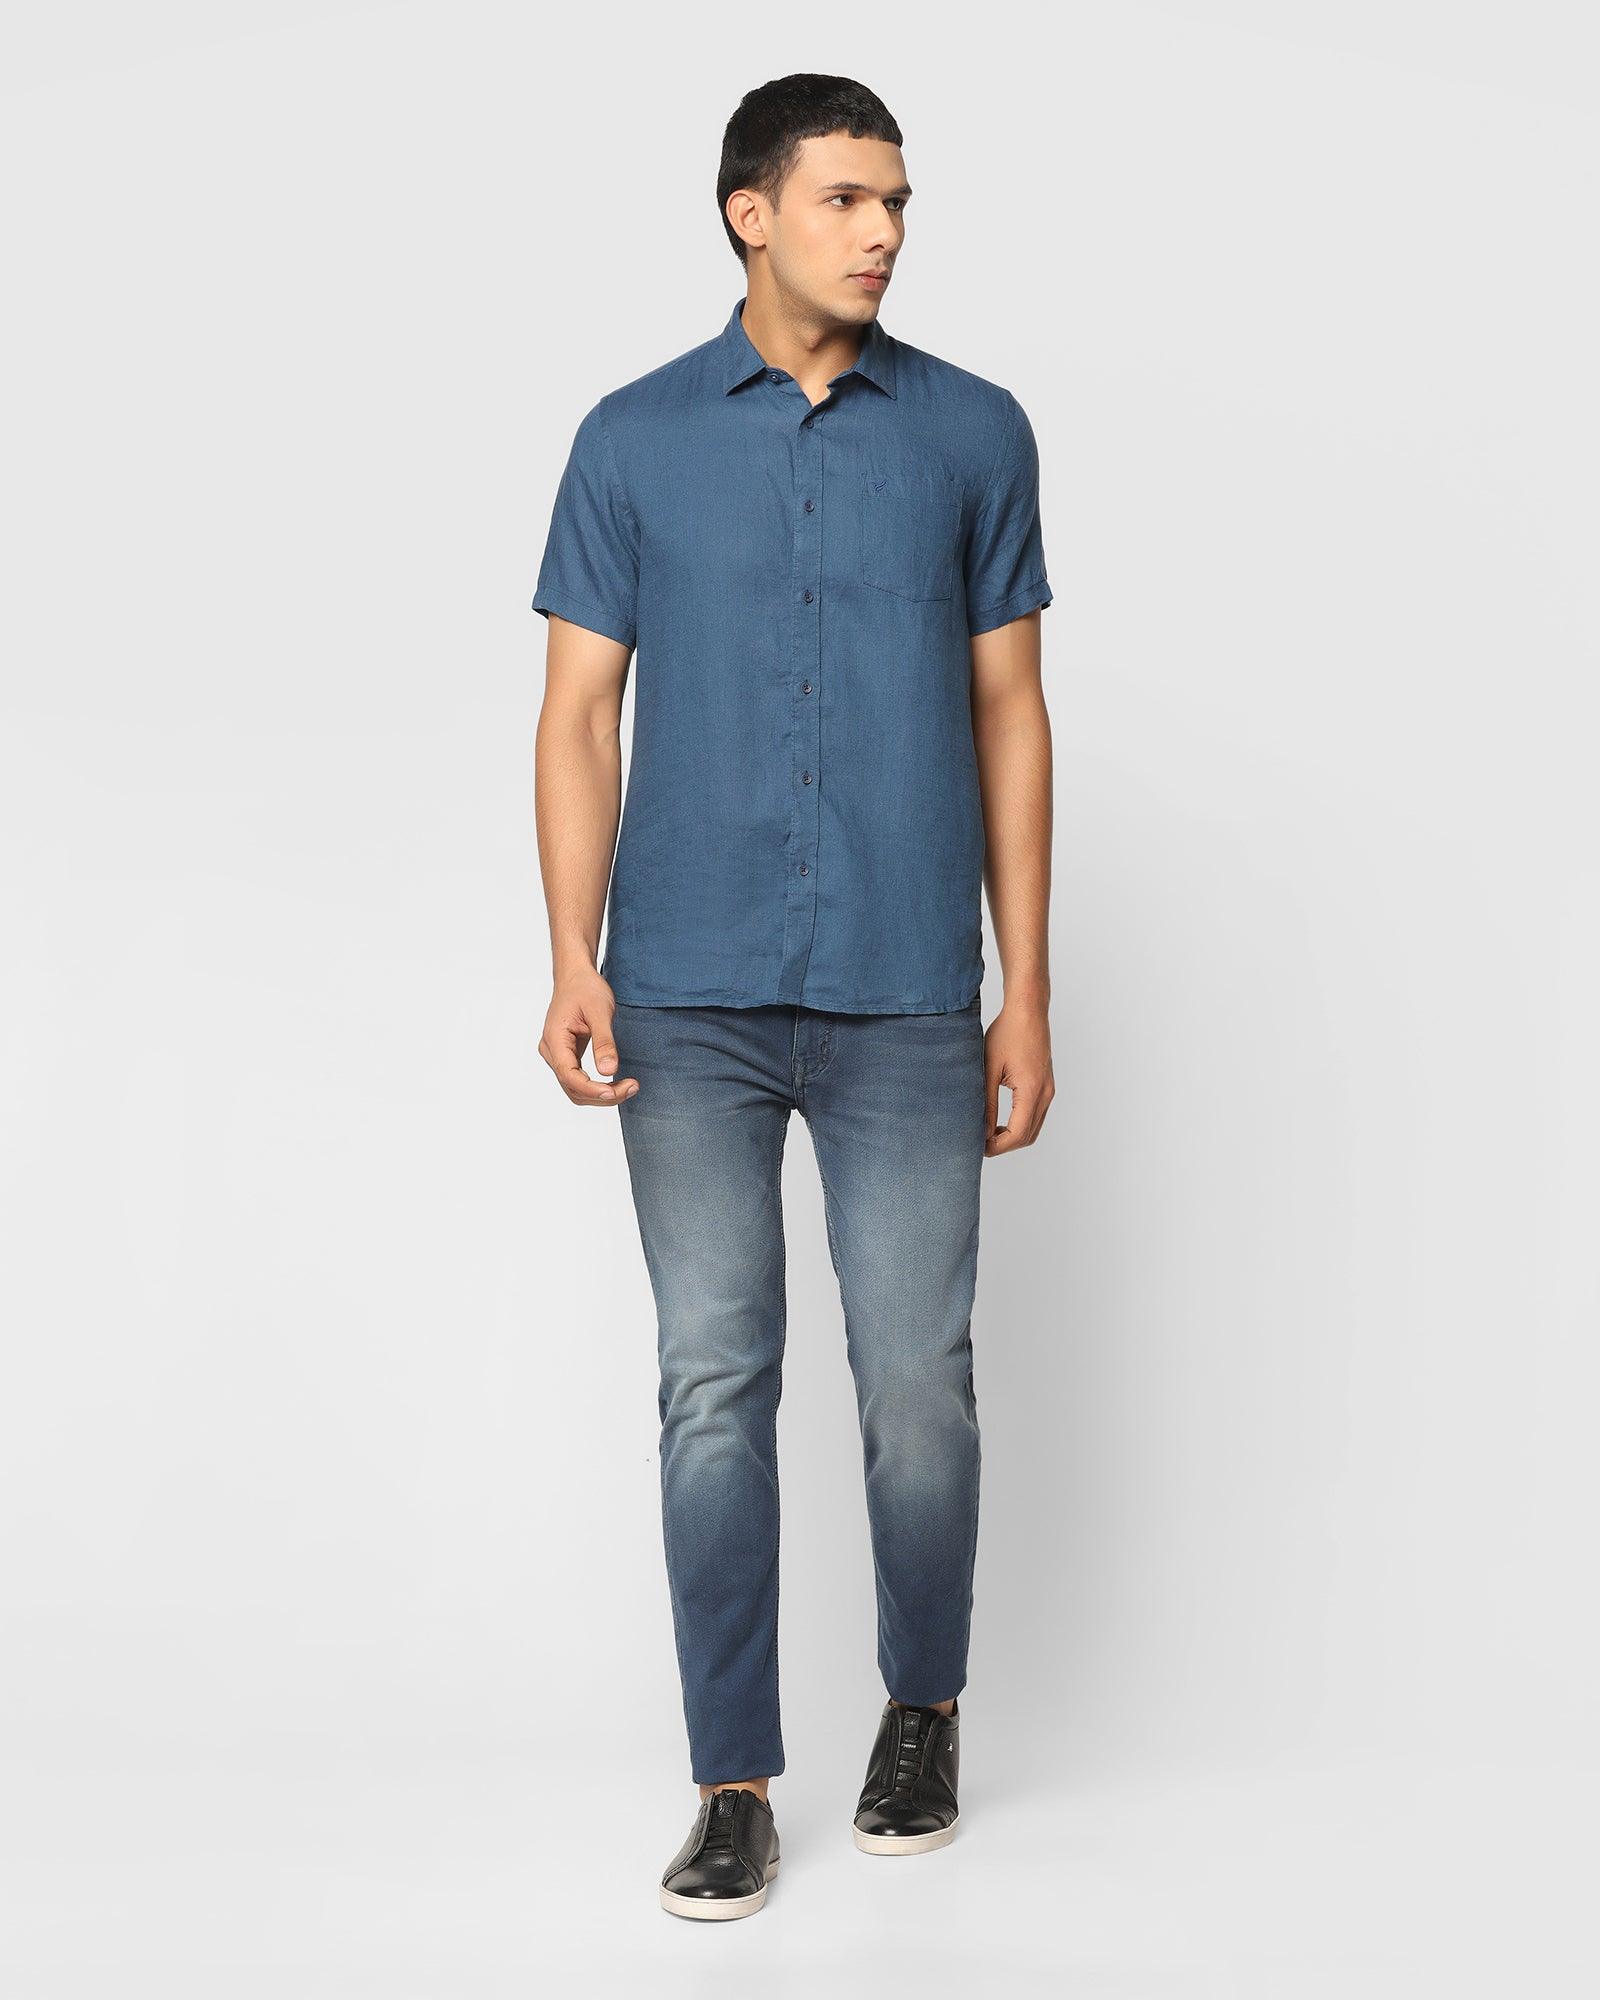 Linen Formal Half Sleeve Blue Solid Shirt - Bowen